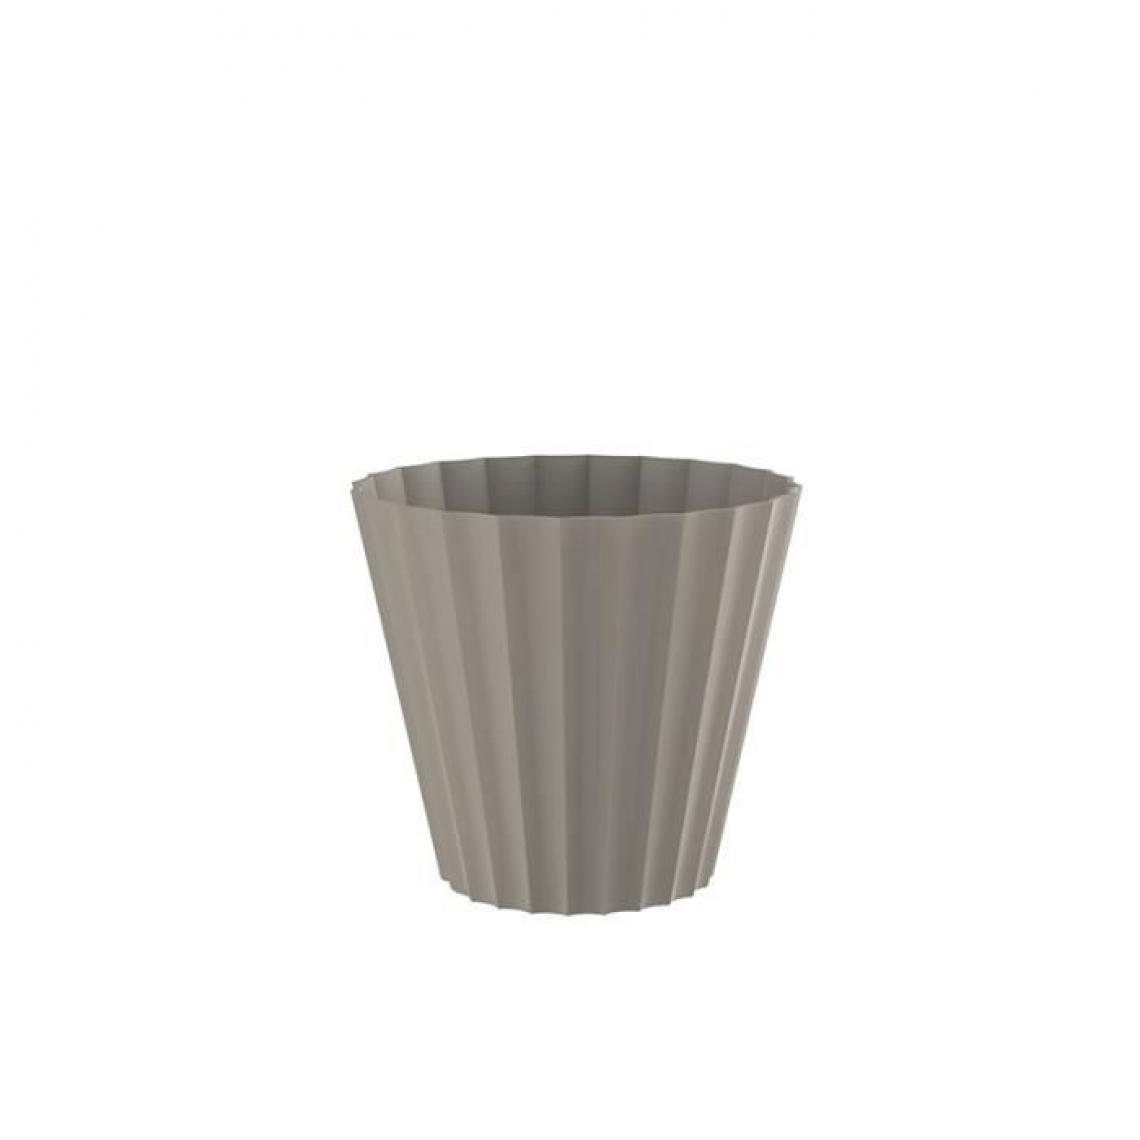 Plastiken - PLASTIKEN Pot Doric Maceta - Ø18 x 16 cm - Ecru - Pots, cache-pots